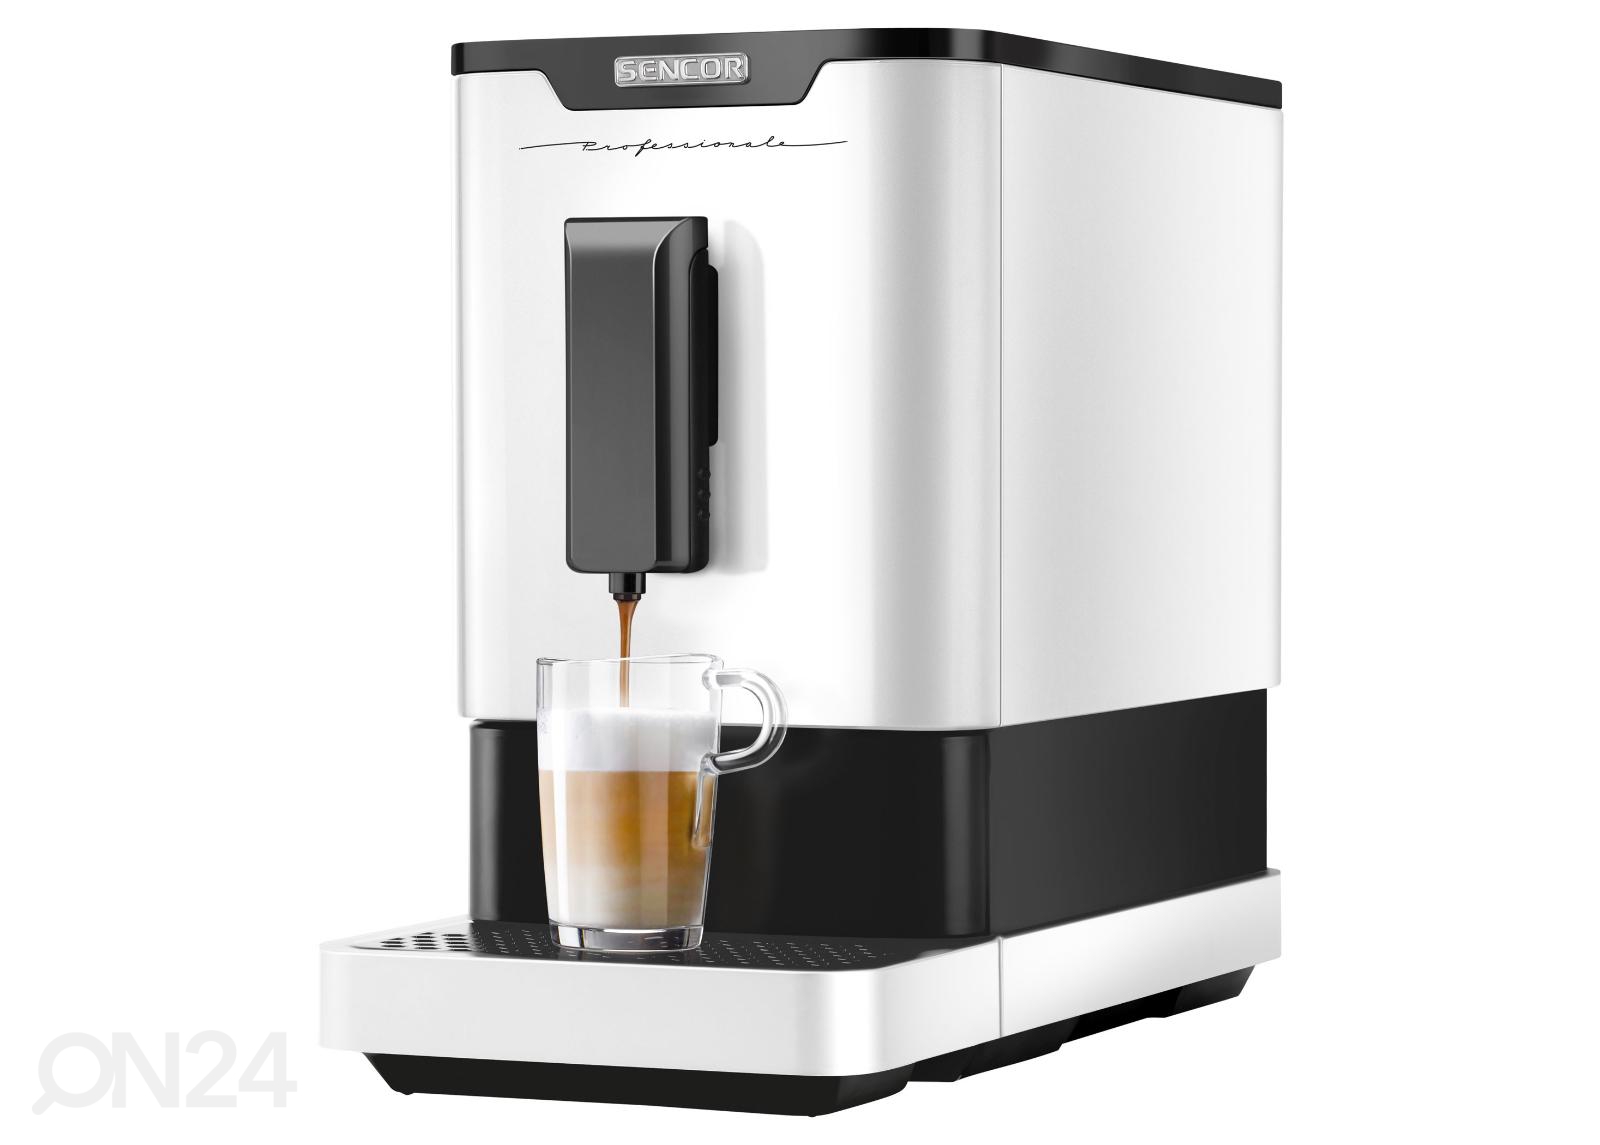 Espressomasin Sencor suurendatud